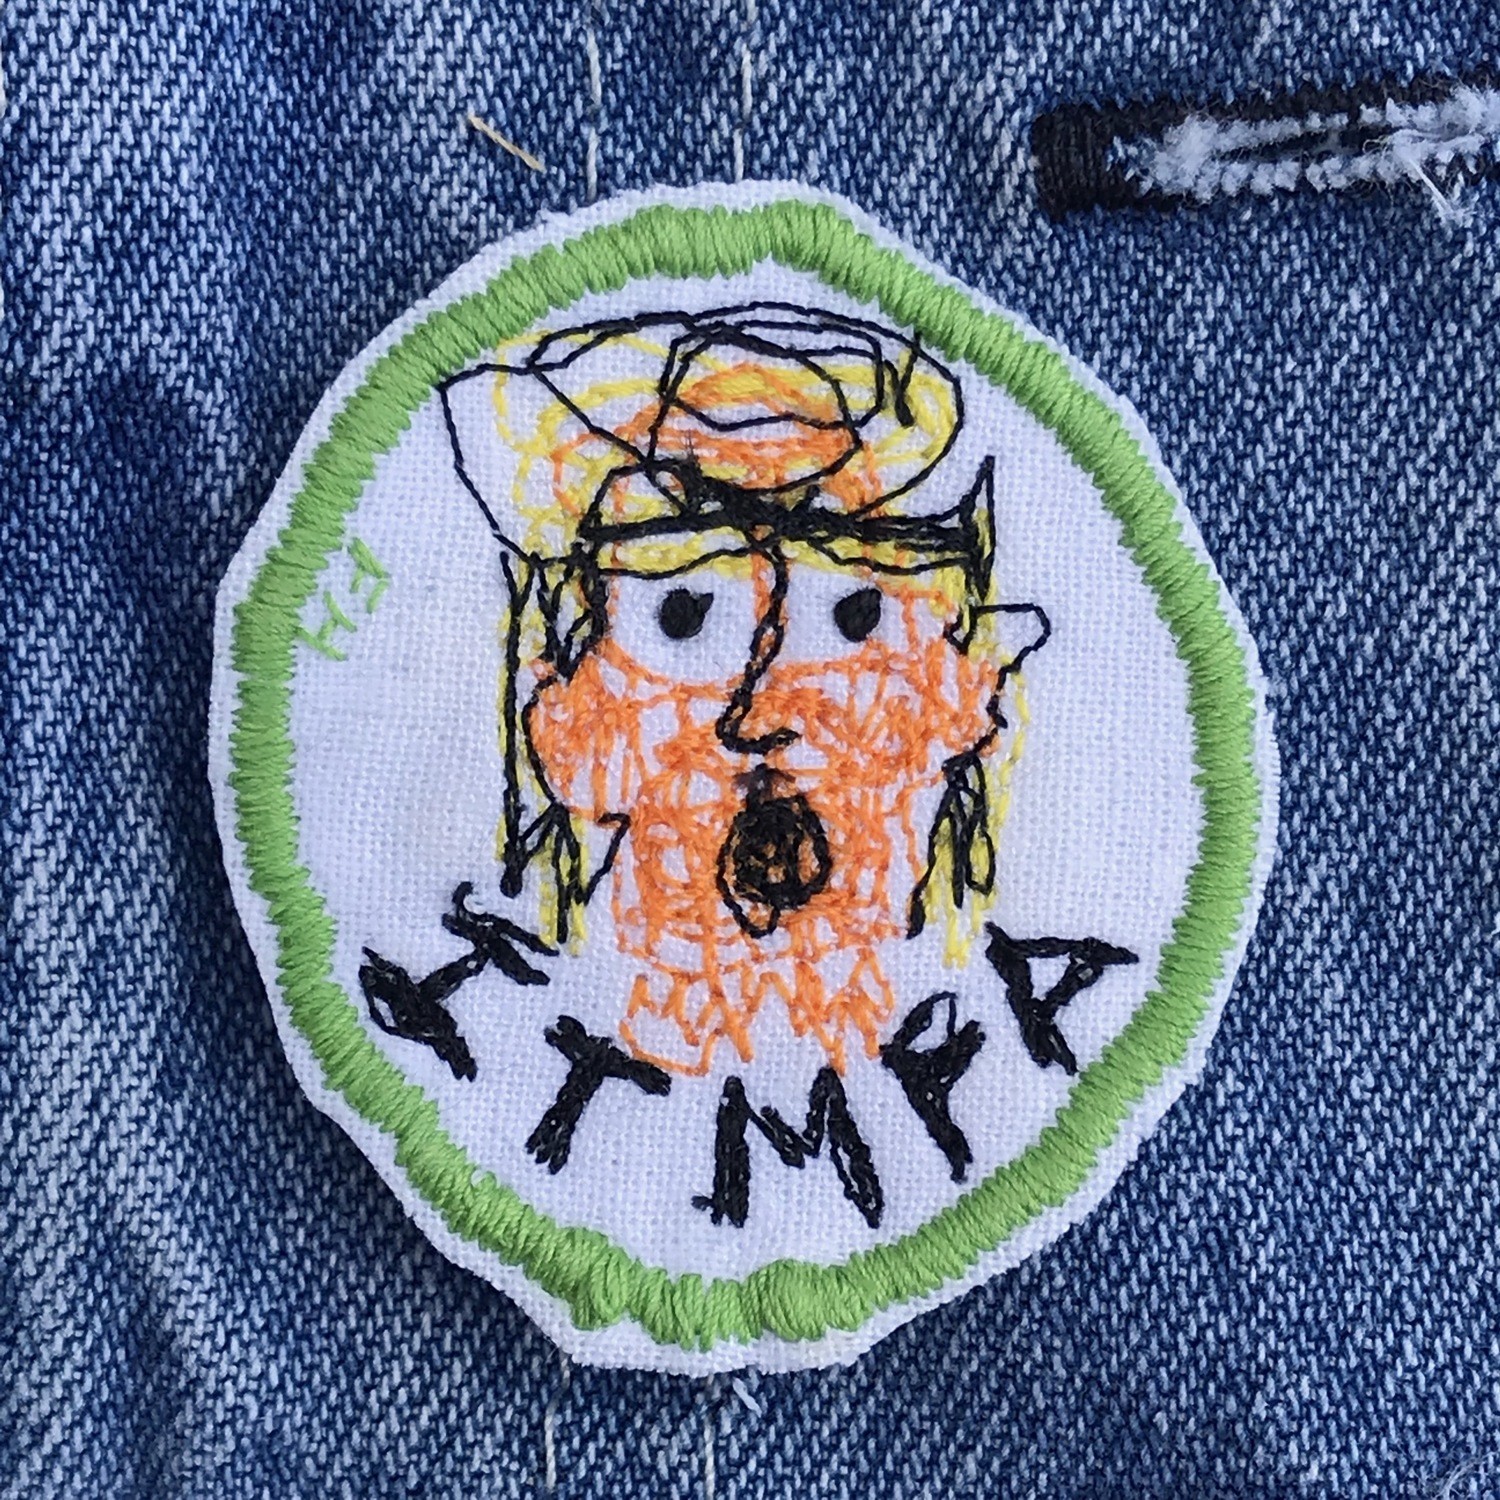 ITMFA Anti-Trump Patch